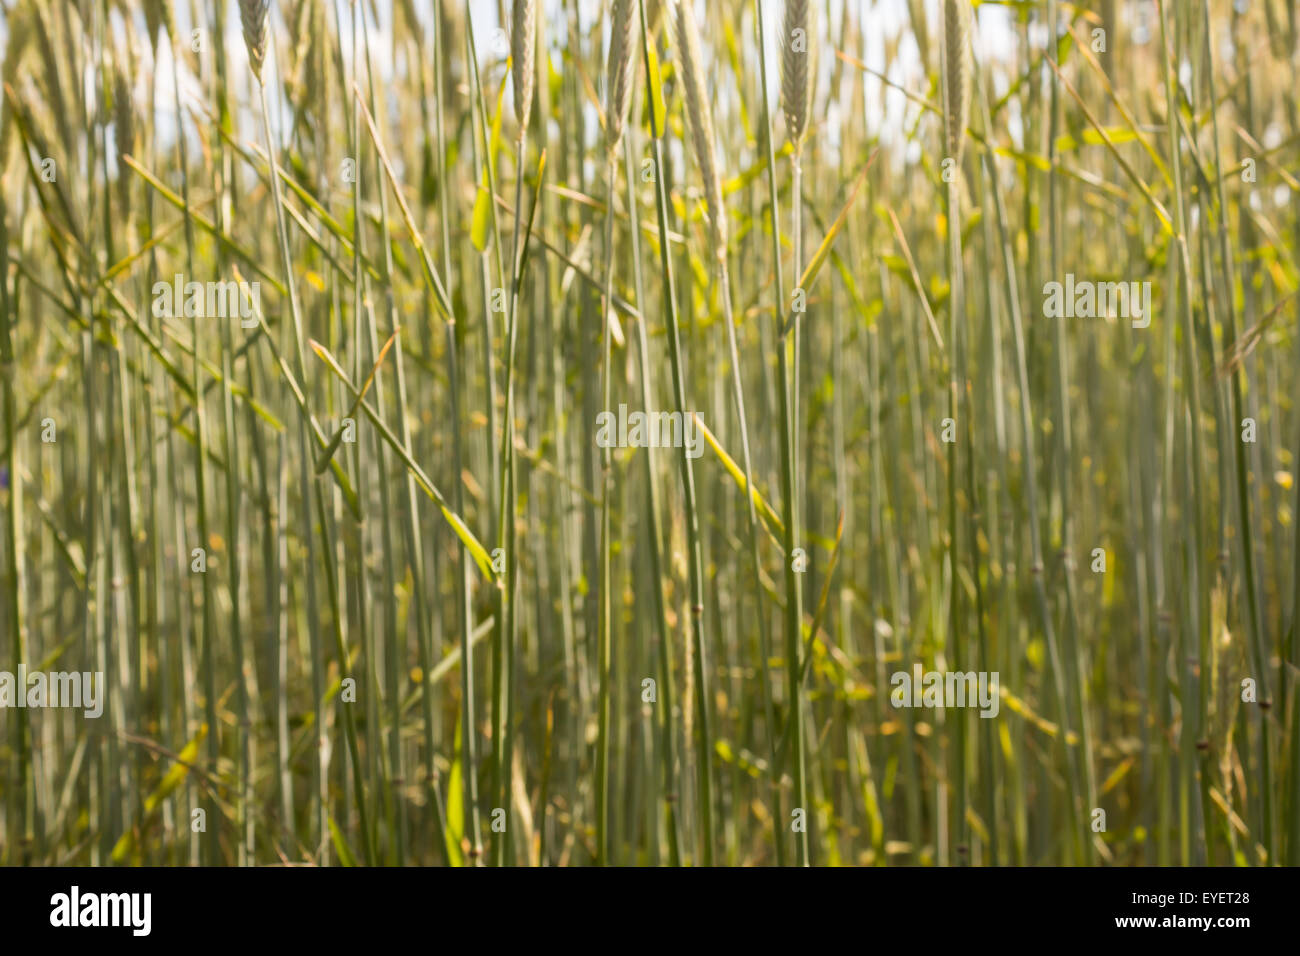 nature background - wheat field close up Stock Photo